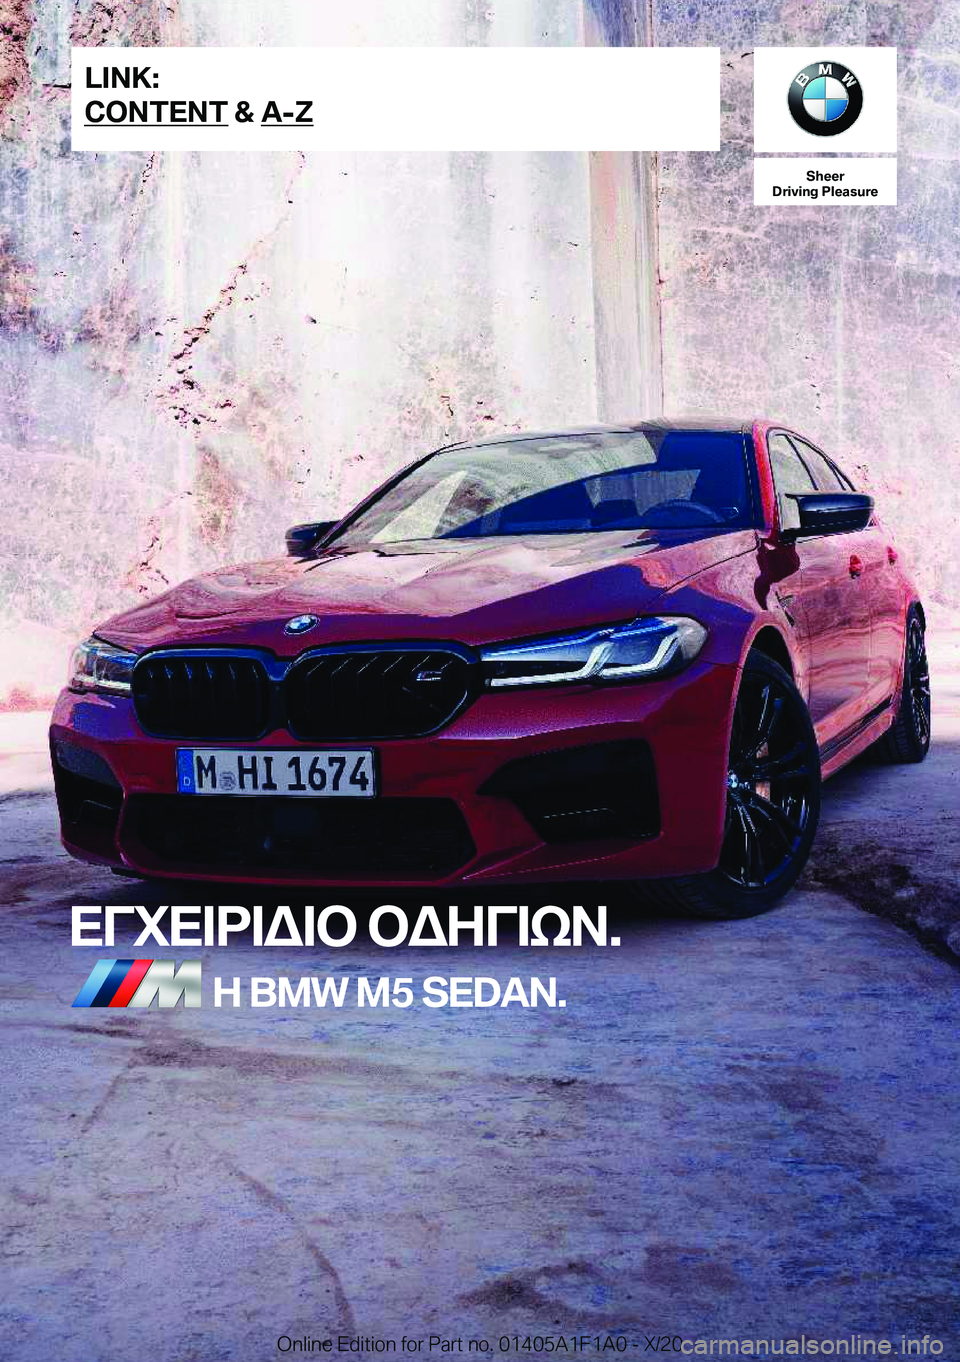 BMW M5 2021  ΟΔΗΓΌΣ ΧΡΉΣΗΣ (in Greek) �S�h�e�e�r
�D�r�i�v�i�n�g��P�l�e�a�s�u�r�e
XViX=d=W=b�bWZV=kA�.Z��B�M�W��M�5��S�E�D�A�N�.�L�I�N�K�:
�C�O�N�T�E�N�T��&��A�-�Z�O�n�l�i�n�e��E�d�i�t�i�o�n��f�o�r��P�a�r�t��n�